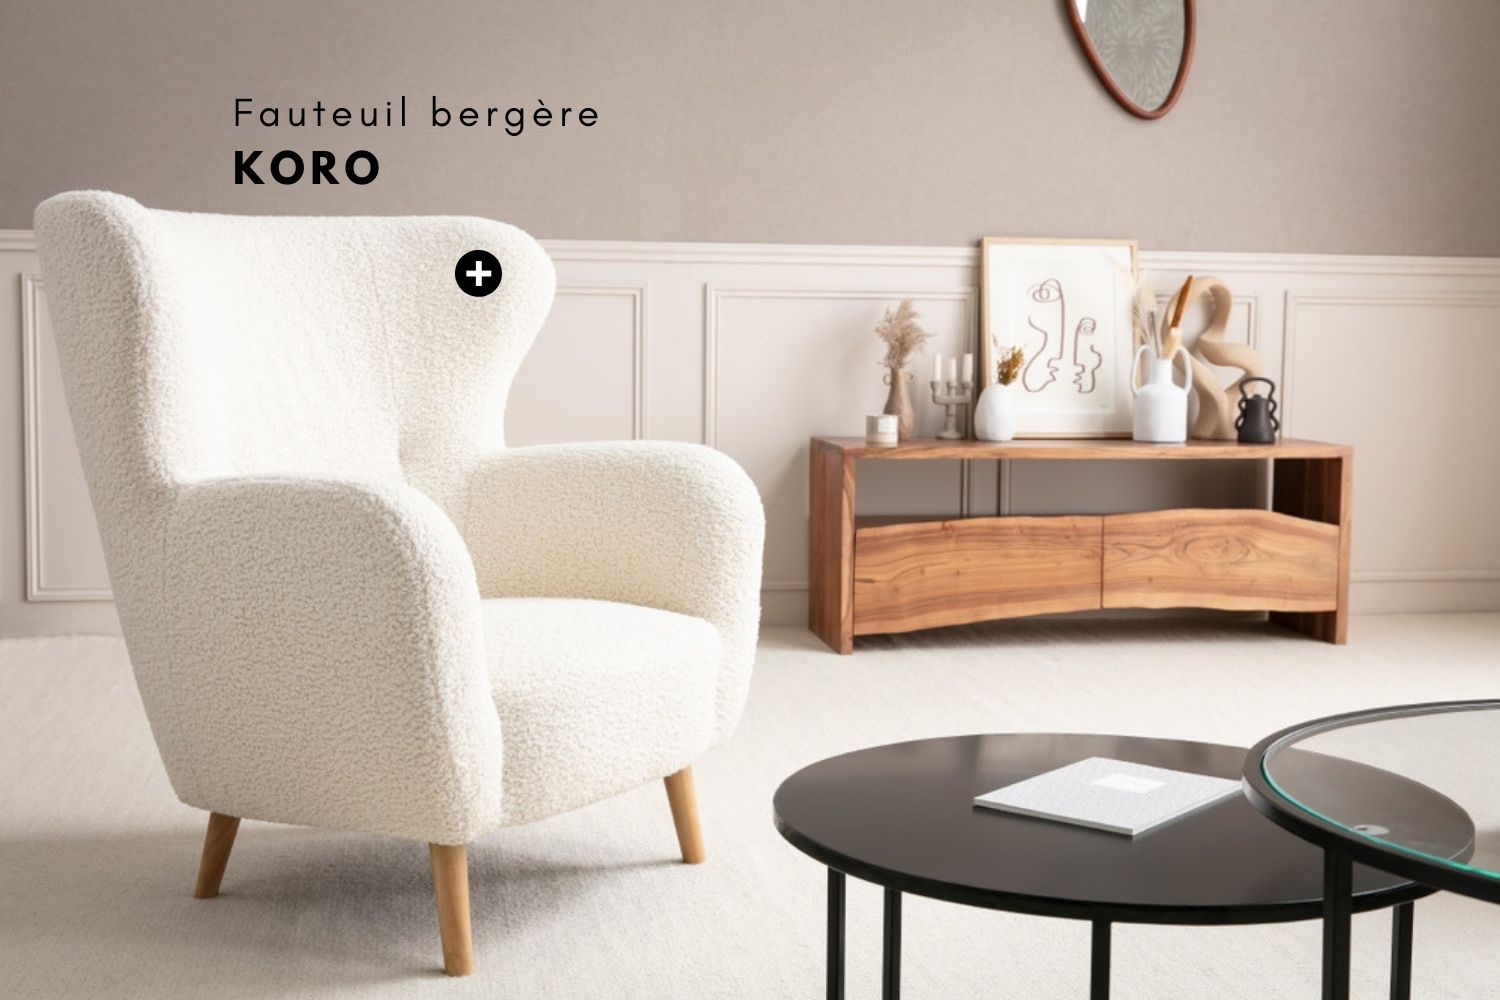 50533-KORO_fauteuil-blanc-design-scandinave-tissu-effet-peau-de-mouton-blanc_salon_miliboo-1